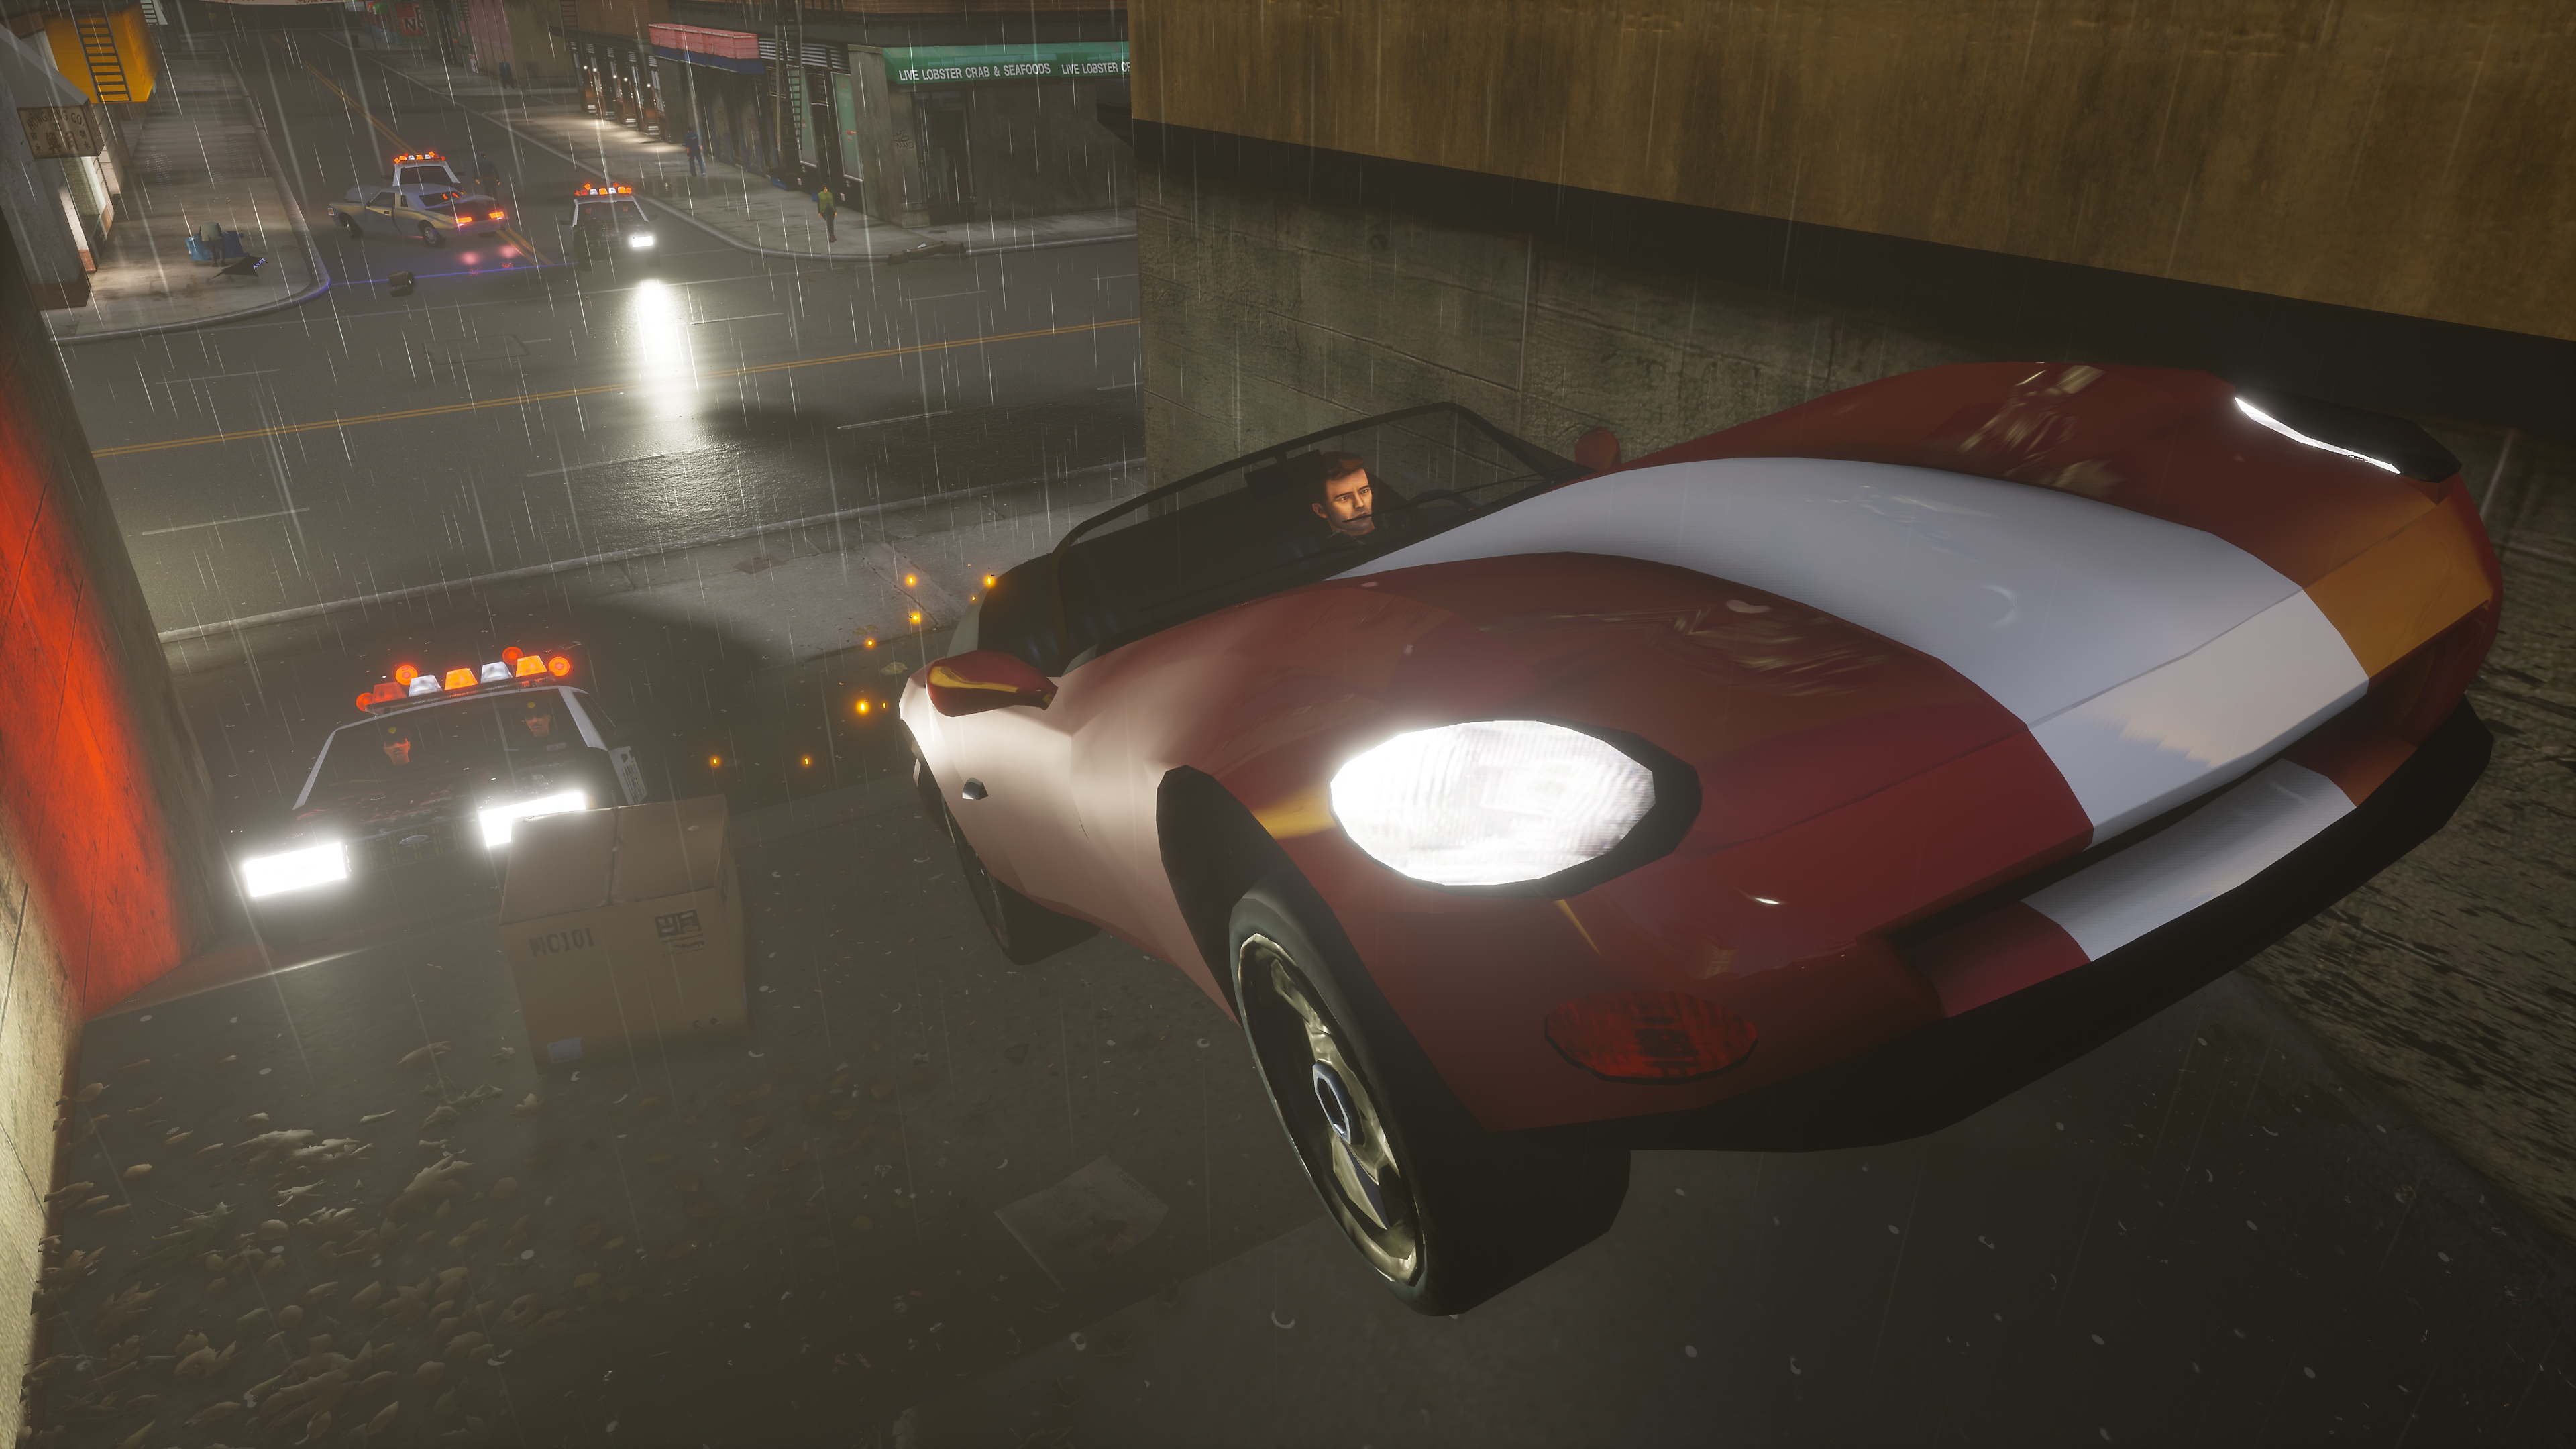  Grand Theft Auto III - Gallery Screenshot 2